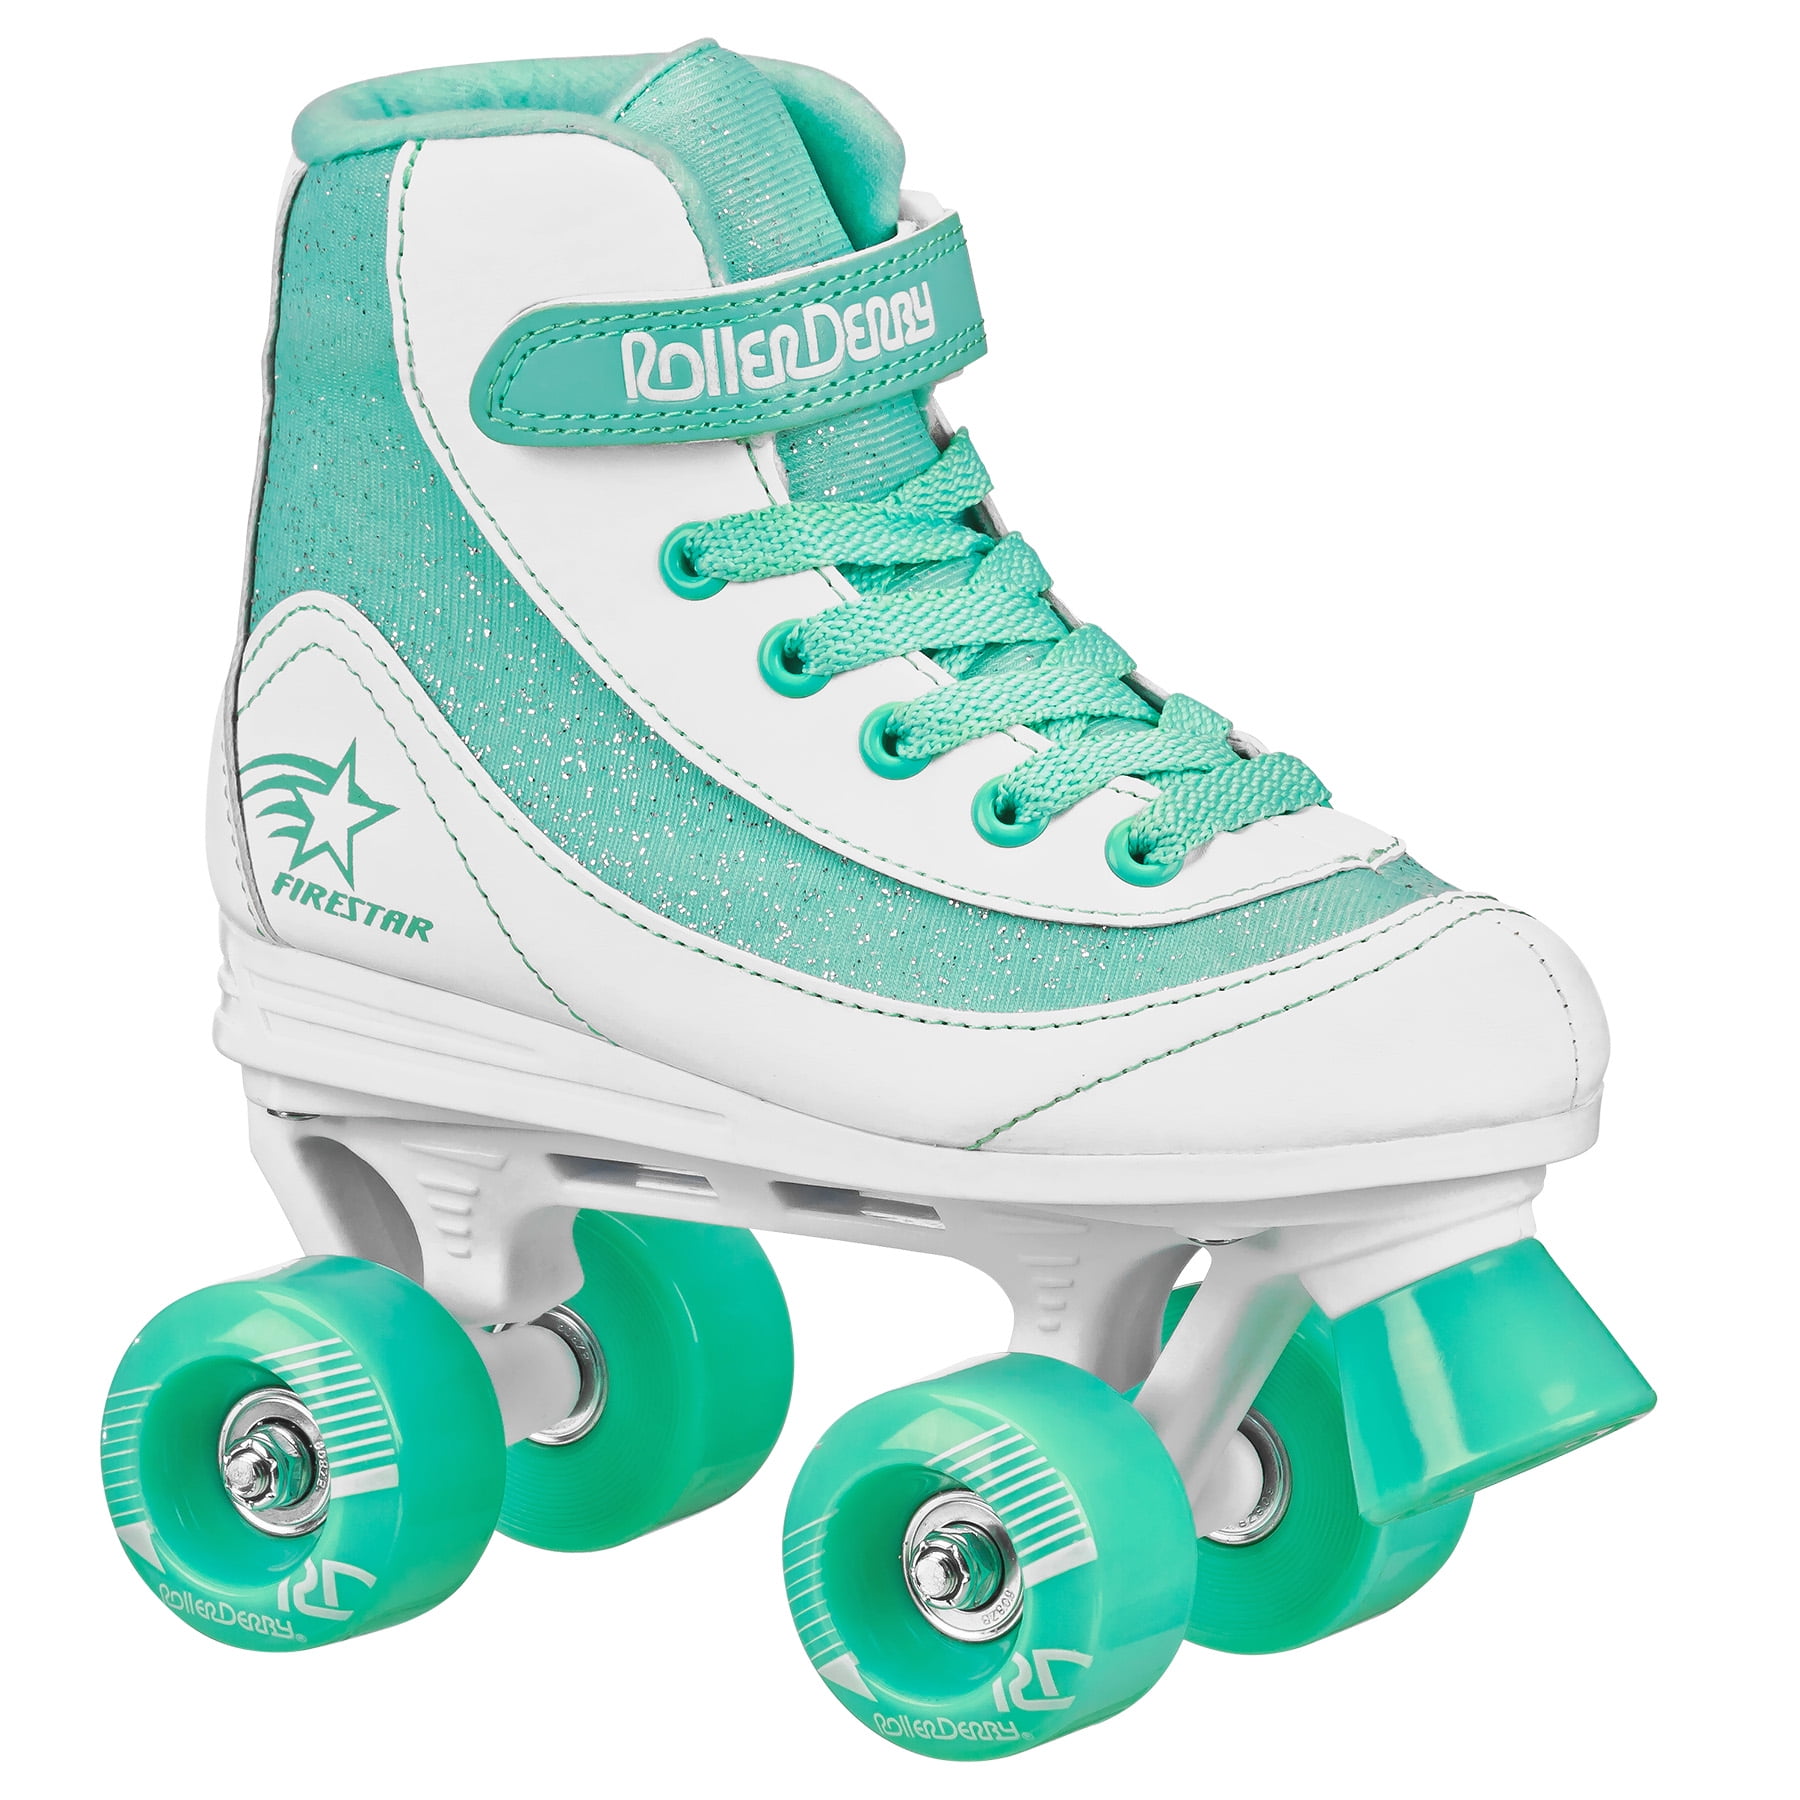 FireStar Youth Girls Roller Skate Sport Shoe Kids Youth Skating Pink Camo Size 1 